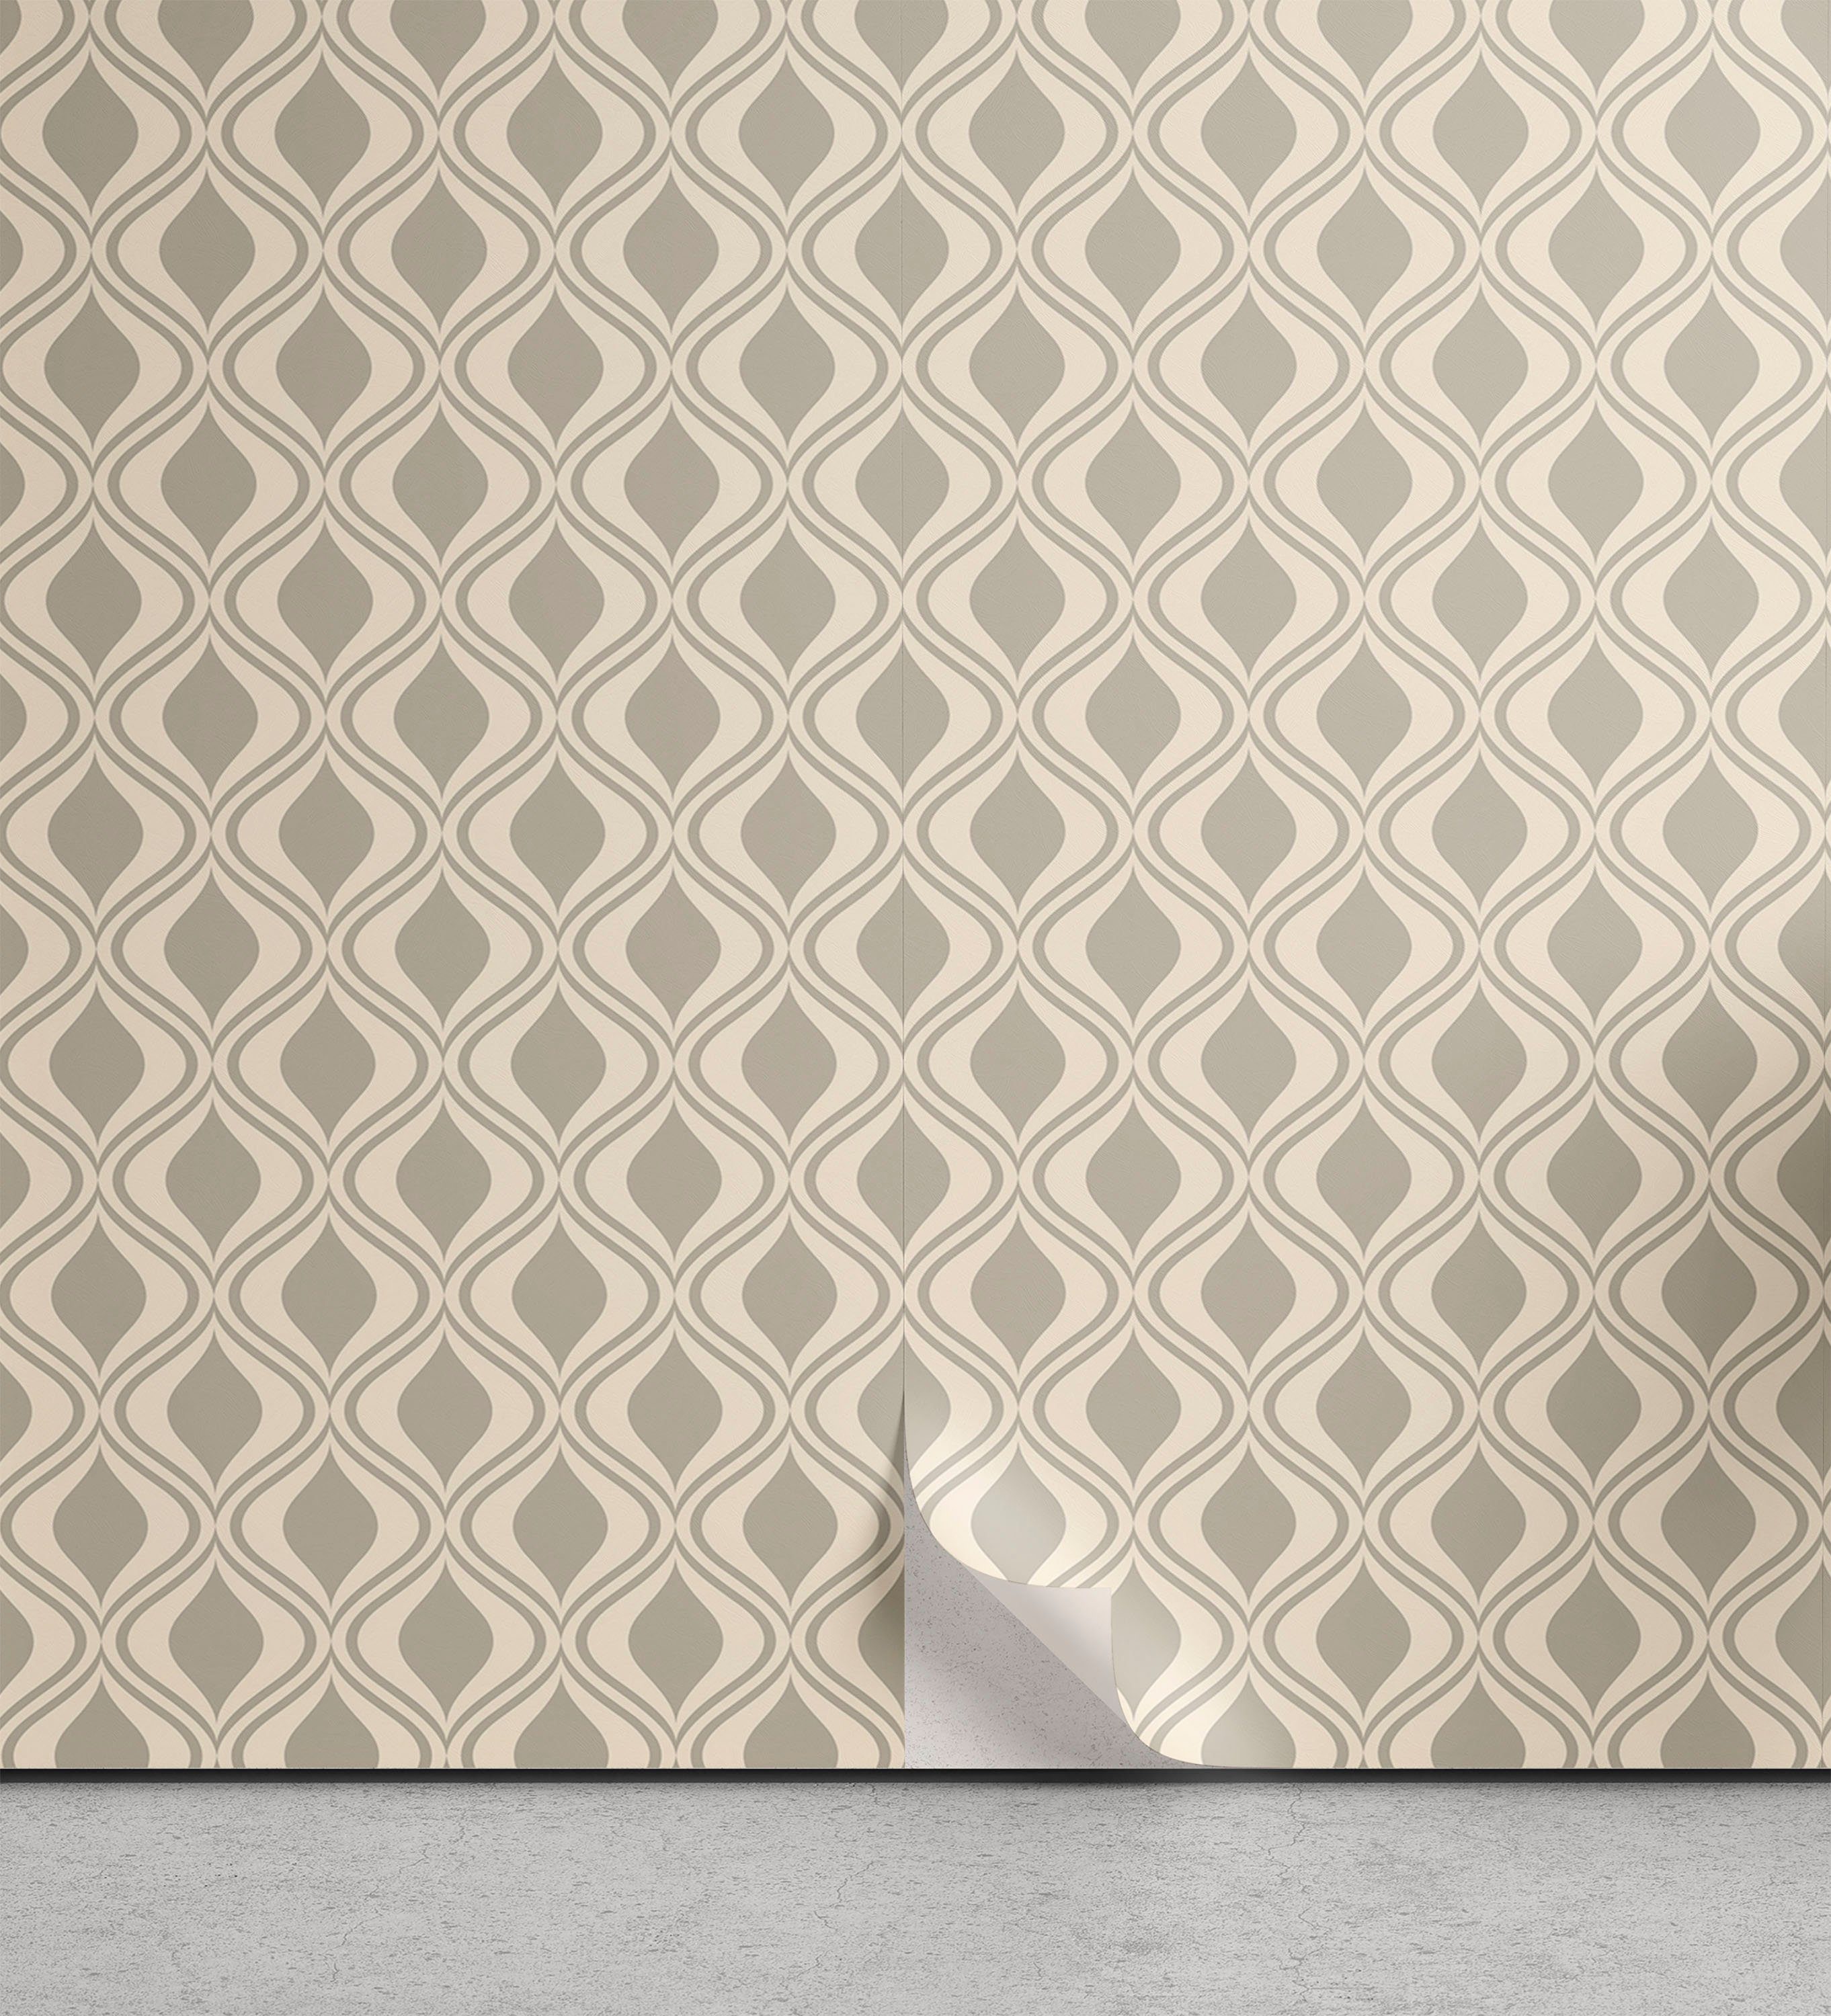 Abakuhaus Vinyltapete selbstklebendes Wohnzimmer Küchenakzent, Retro Abstrakte Wellenförmige Ornament